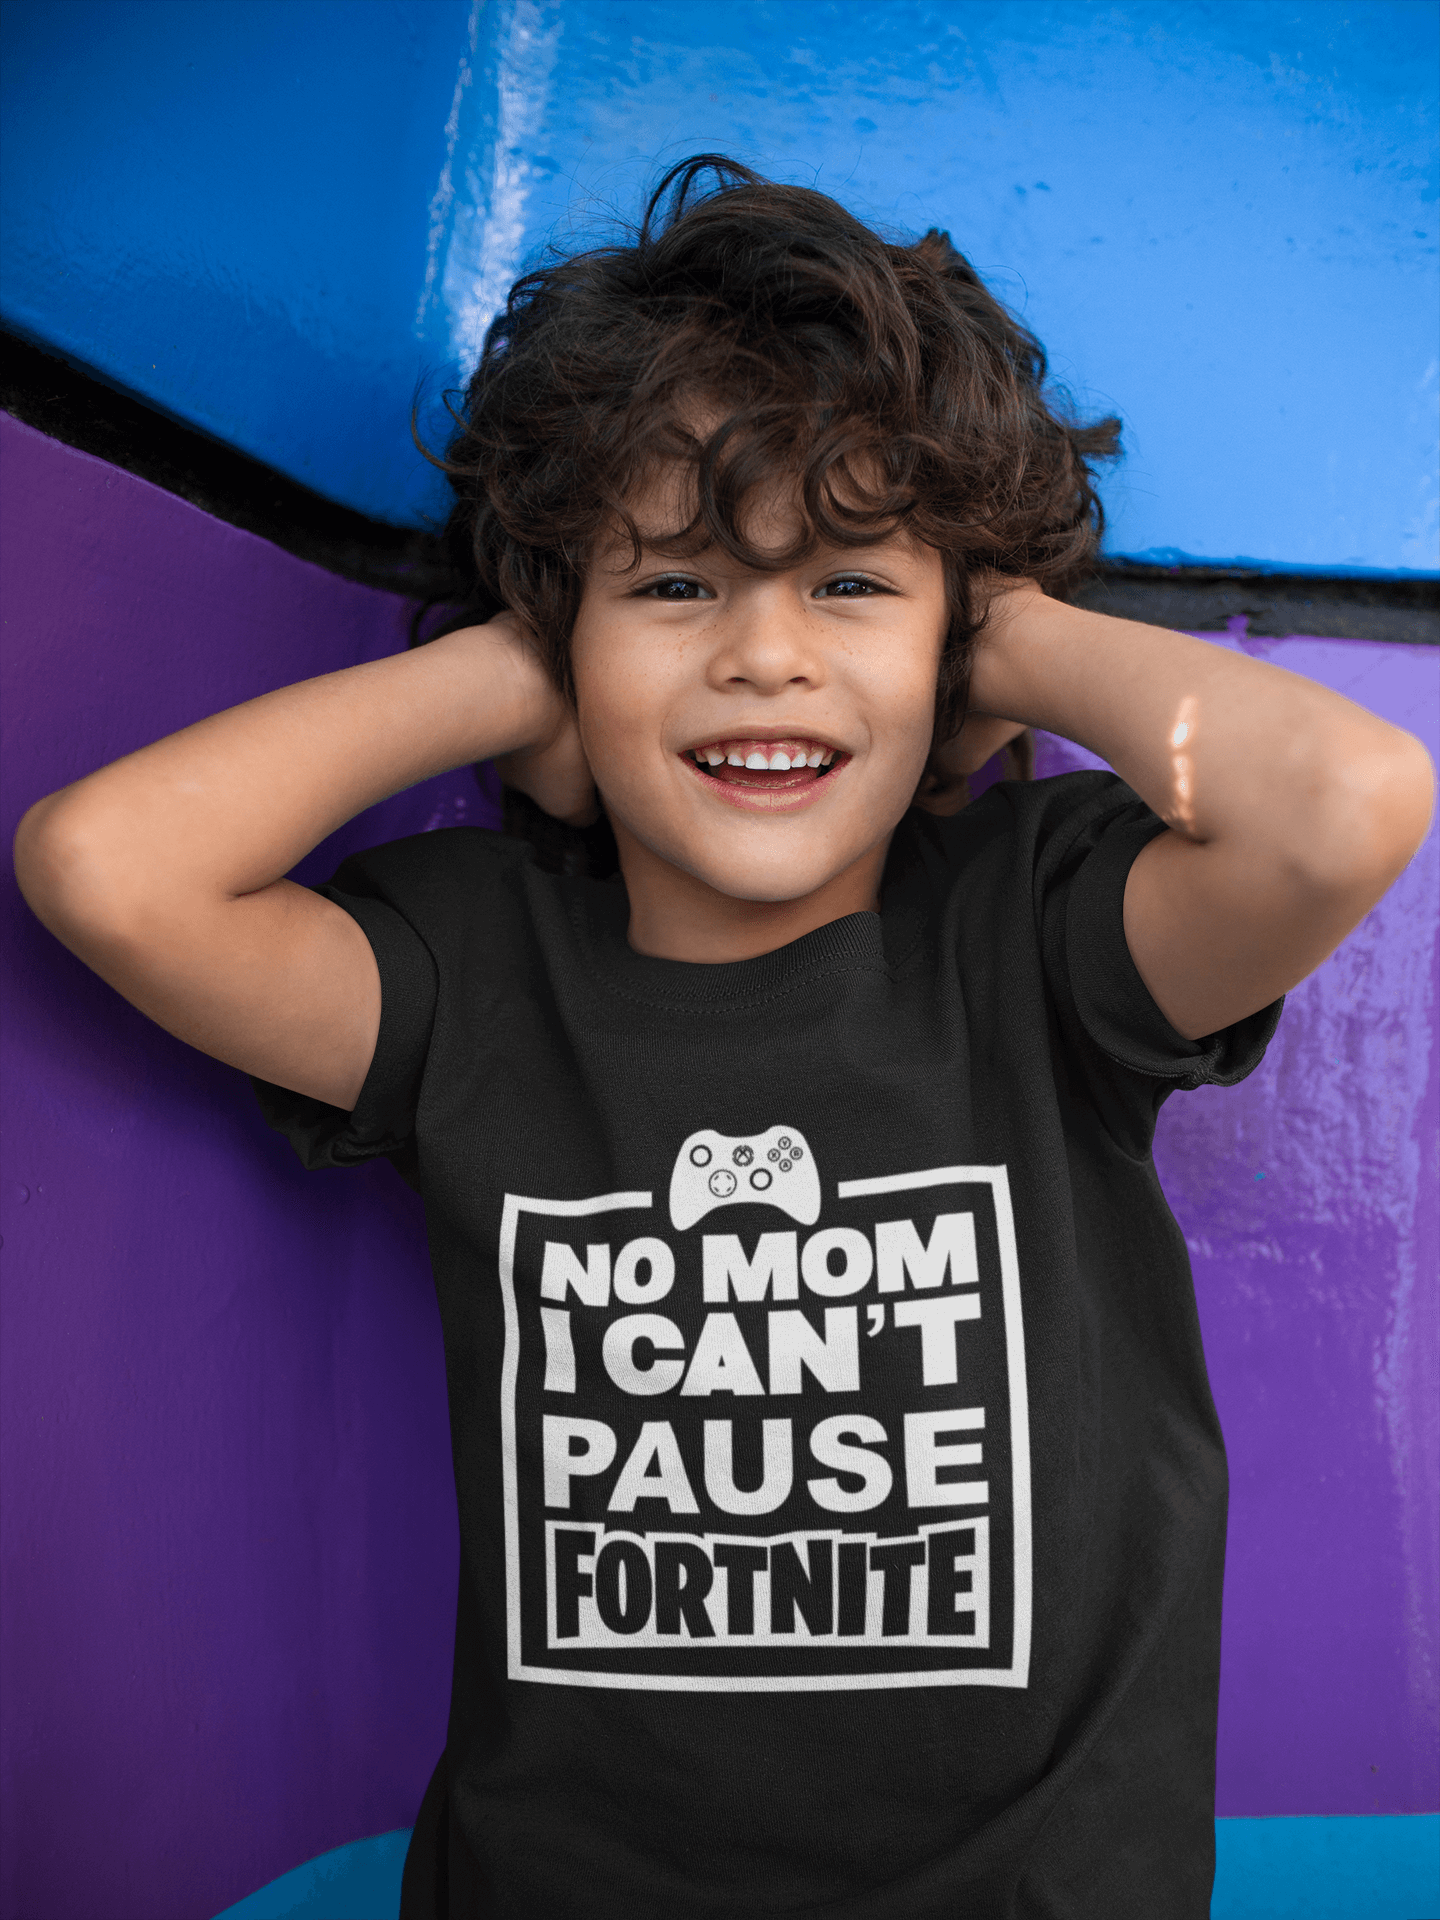 Sapnap | Kids T-Shirt